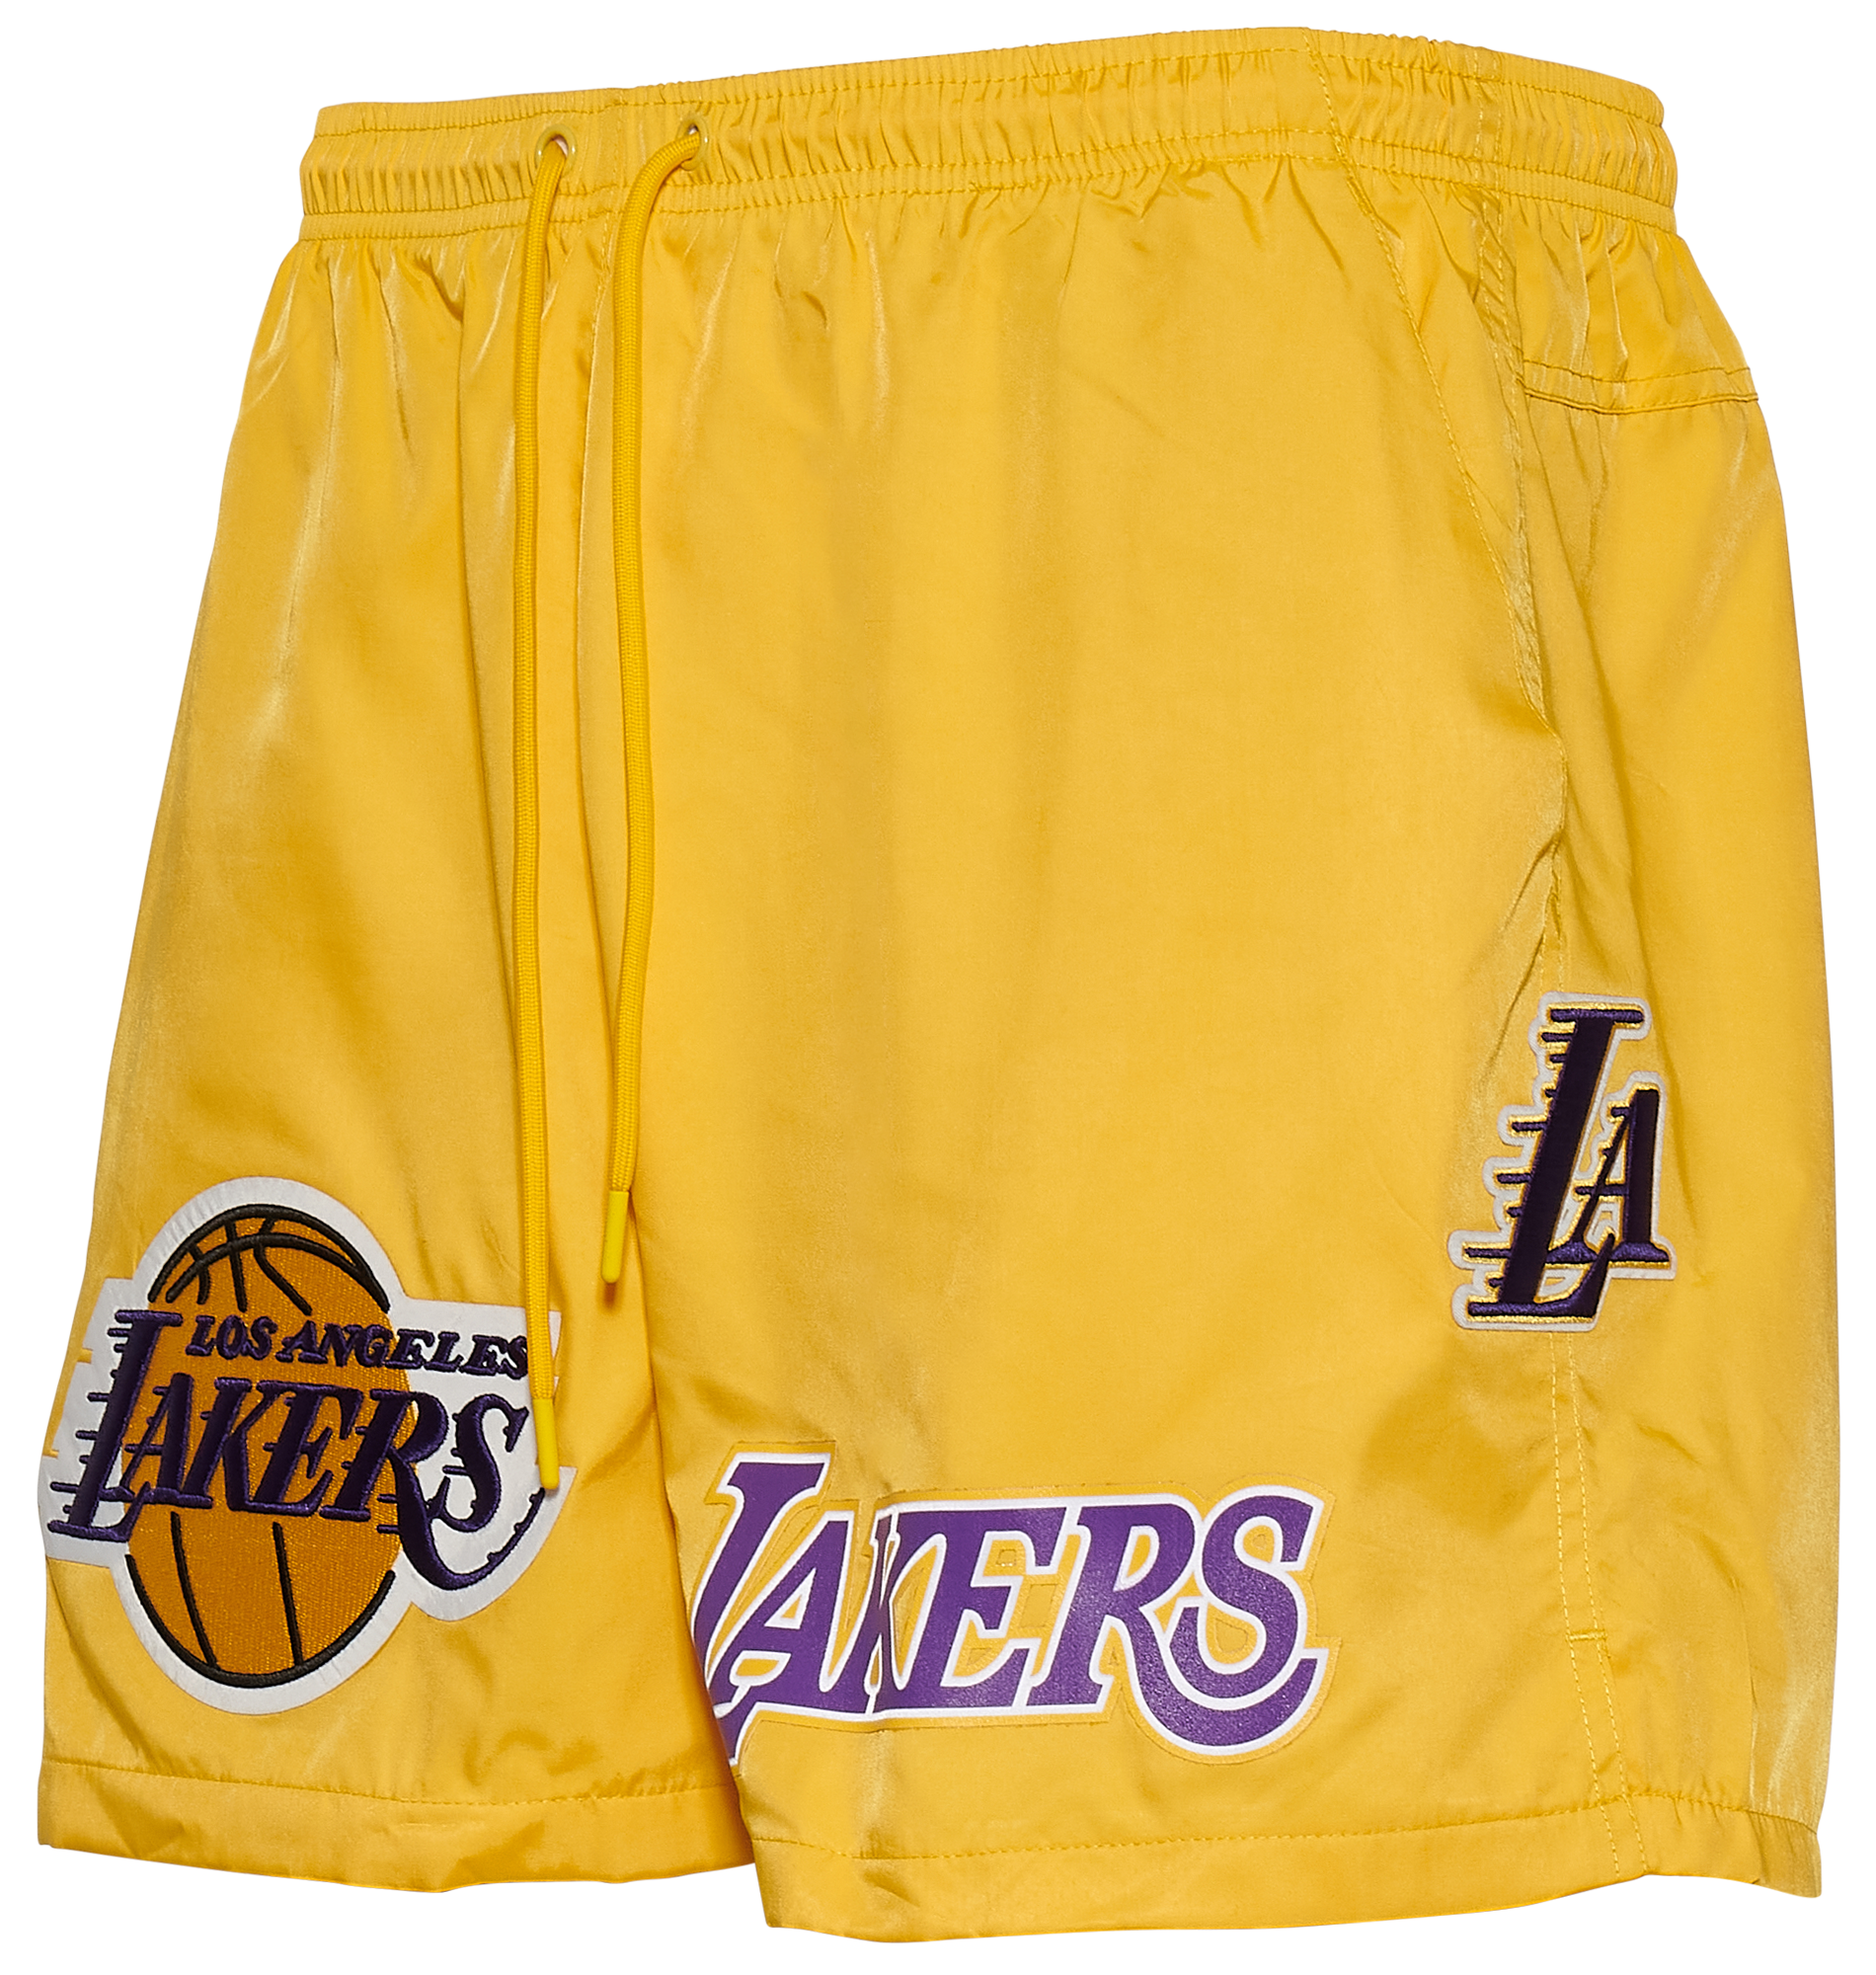 Pro Standard Lakers Team Woven Shorts